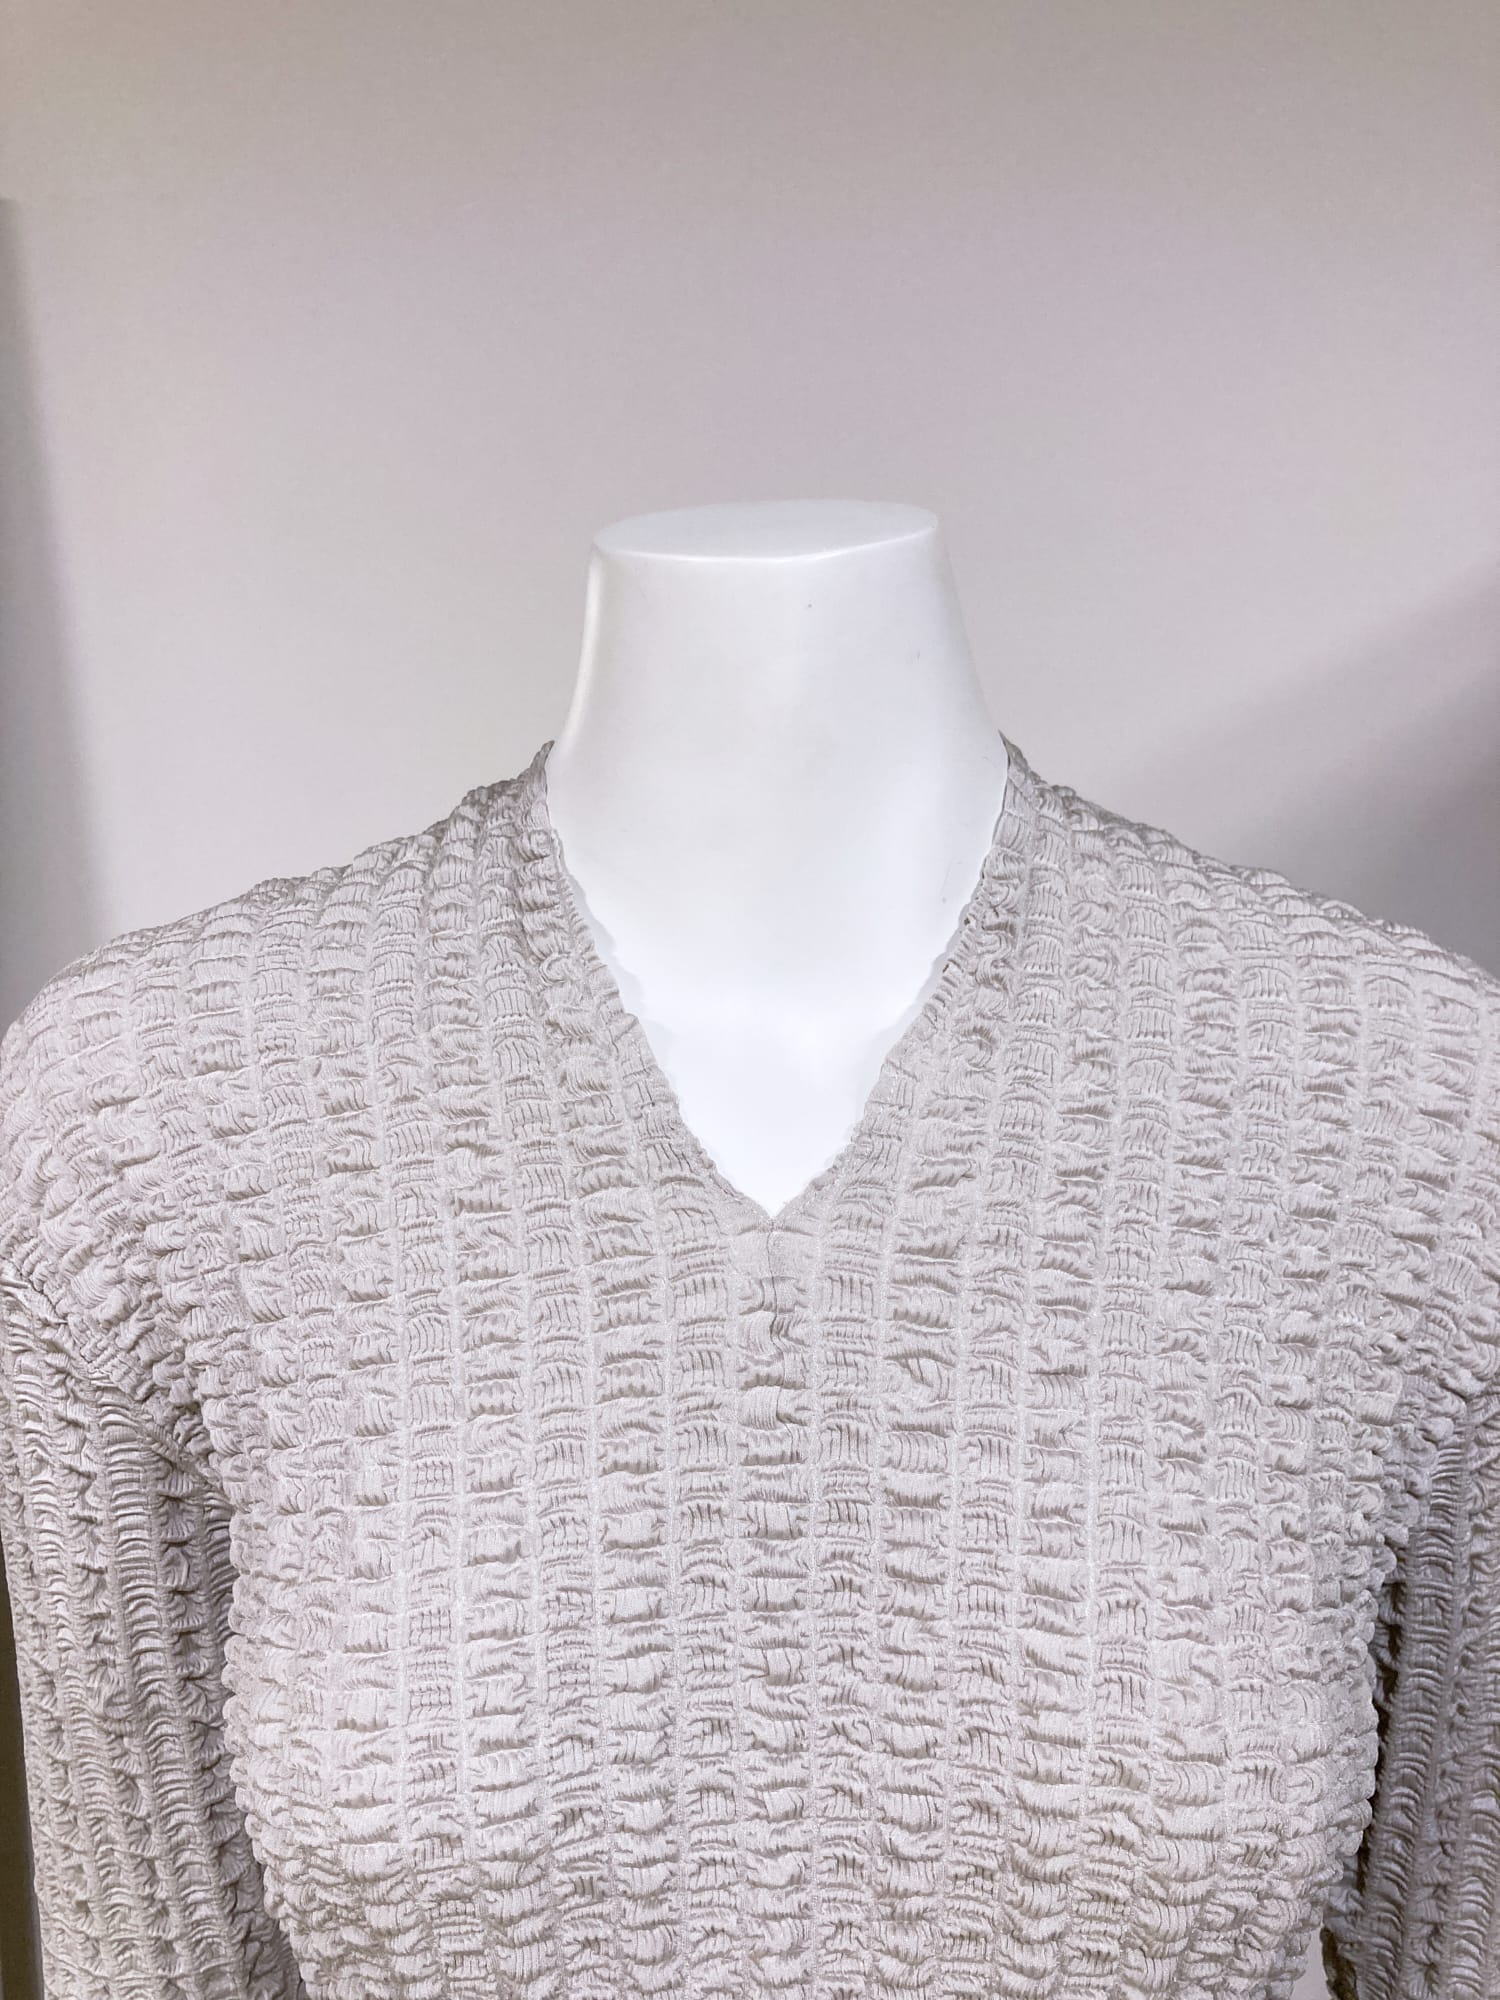 Wrinqle Inoue Pleats greige wrinkled polyester long sleeve top